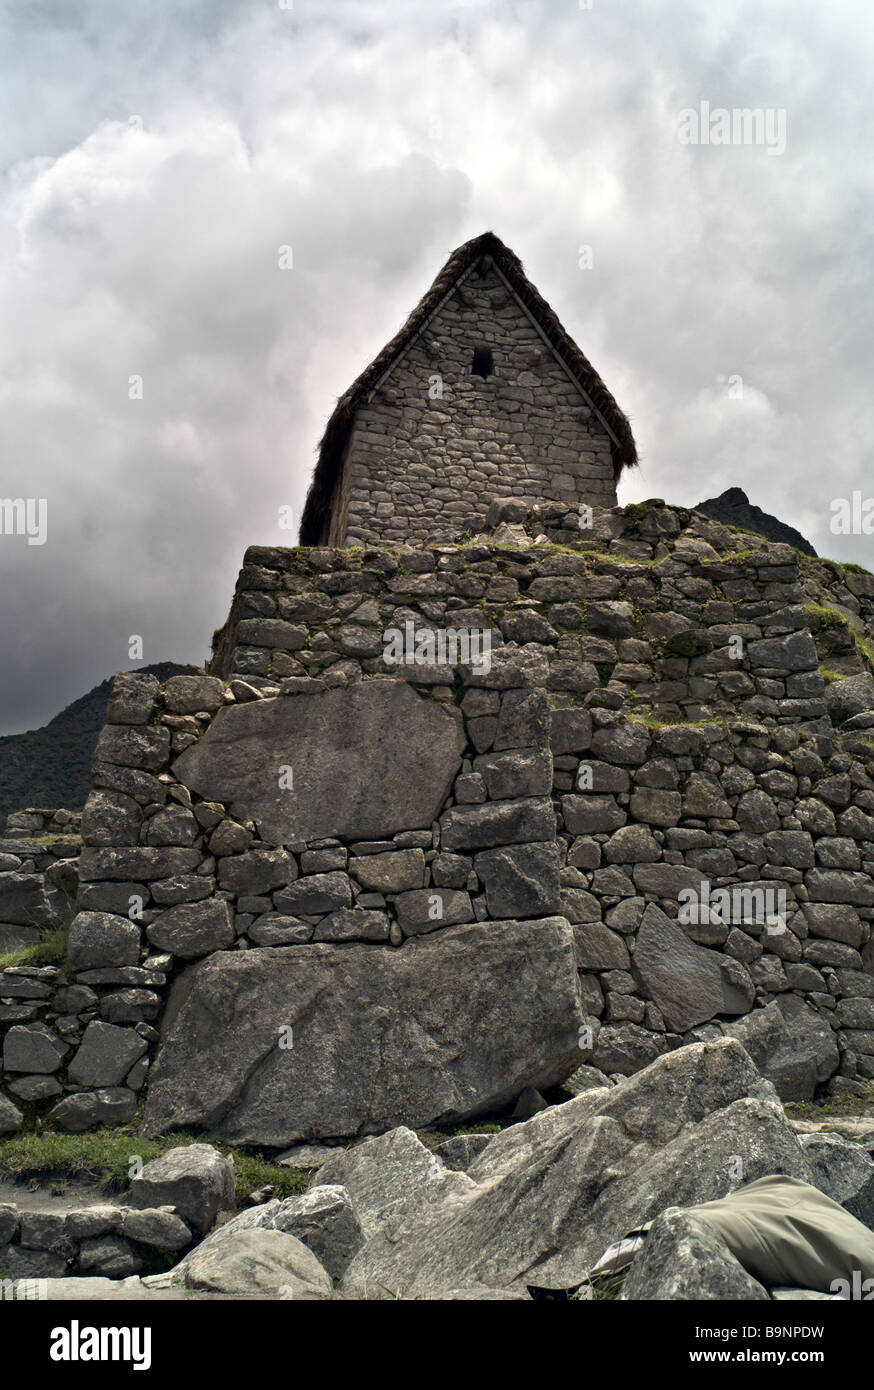 PERU MACHU PICCHU The Hut of the Caretaker of the Funerary Rock at Machu Picchu has a restored thatched roof Stock Photo